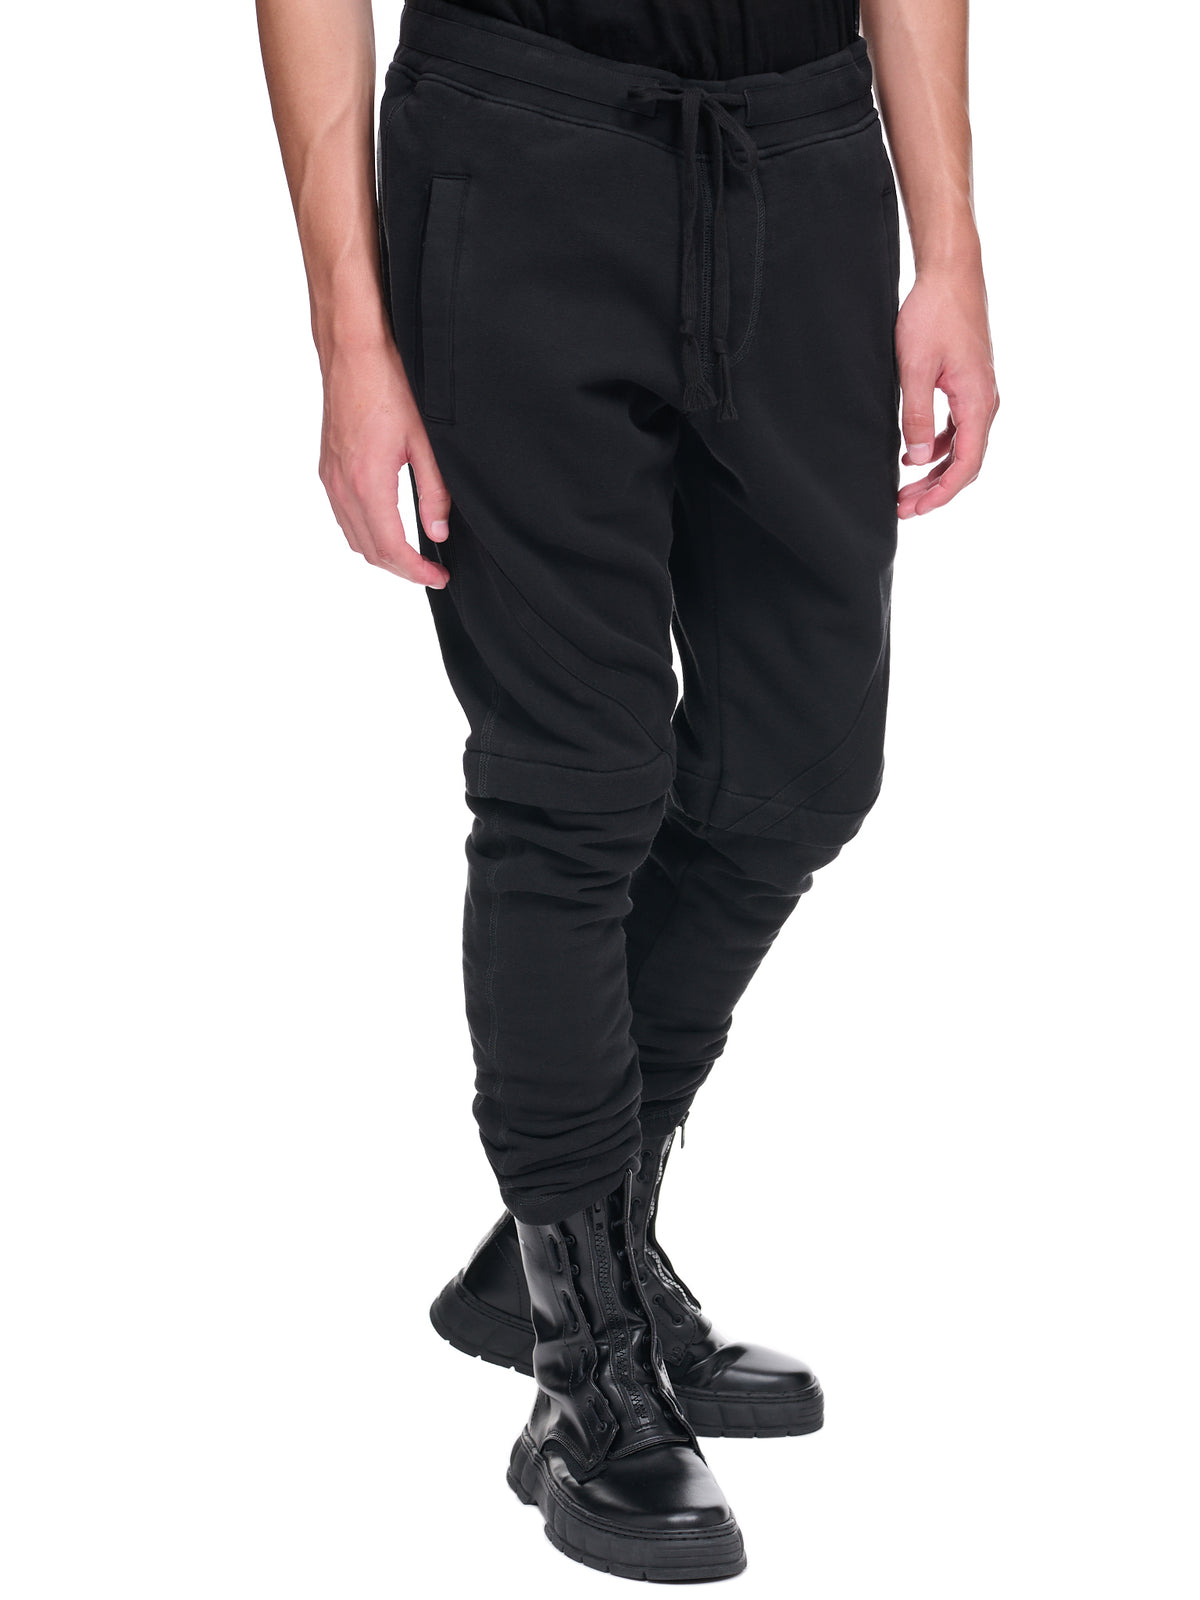 Convertible Sweatpants (EM213-BLACK)